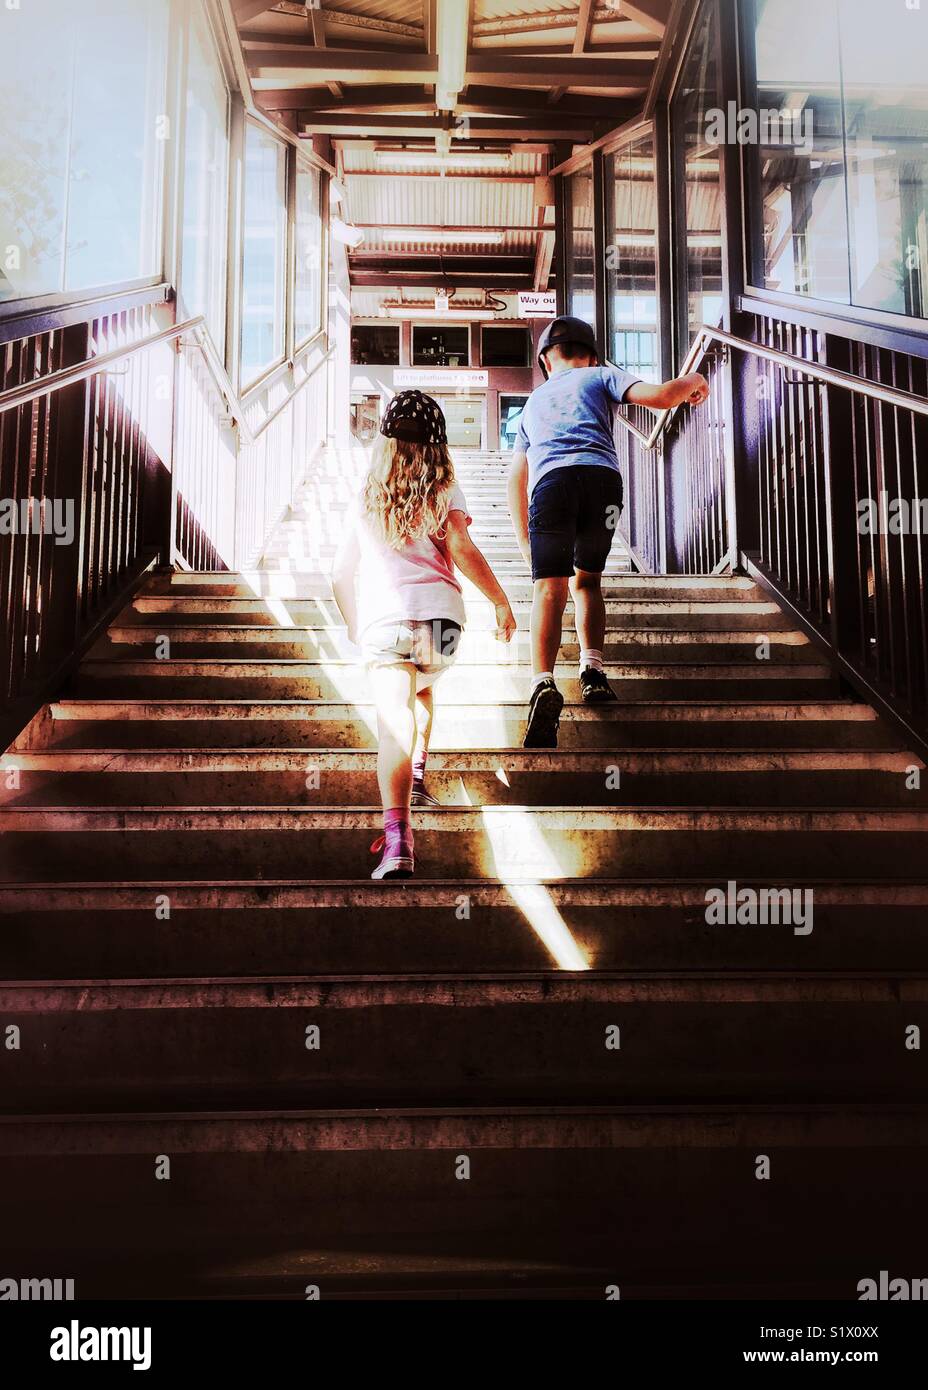 Two kids climb stairs at railway station. Young boy and girl walk up stairway through sunbeam - Kiama, NSW, Australia Stock Photo